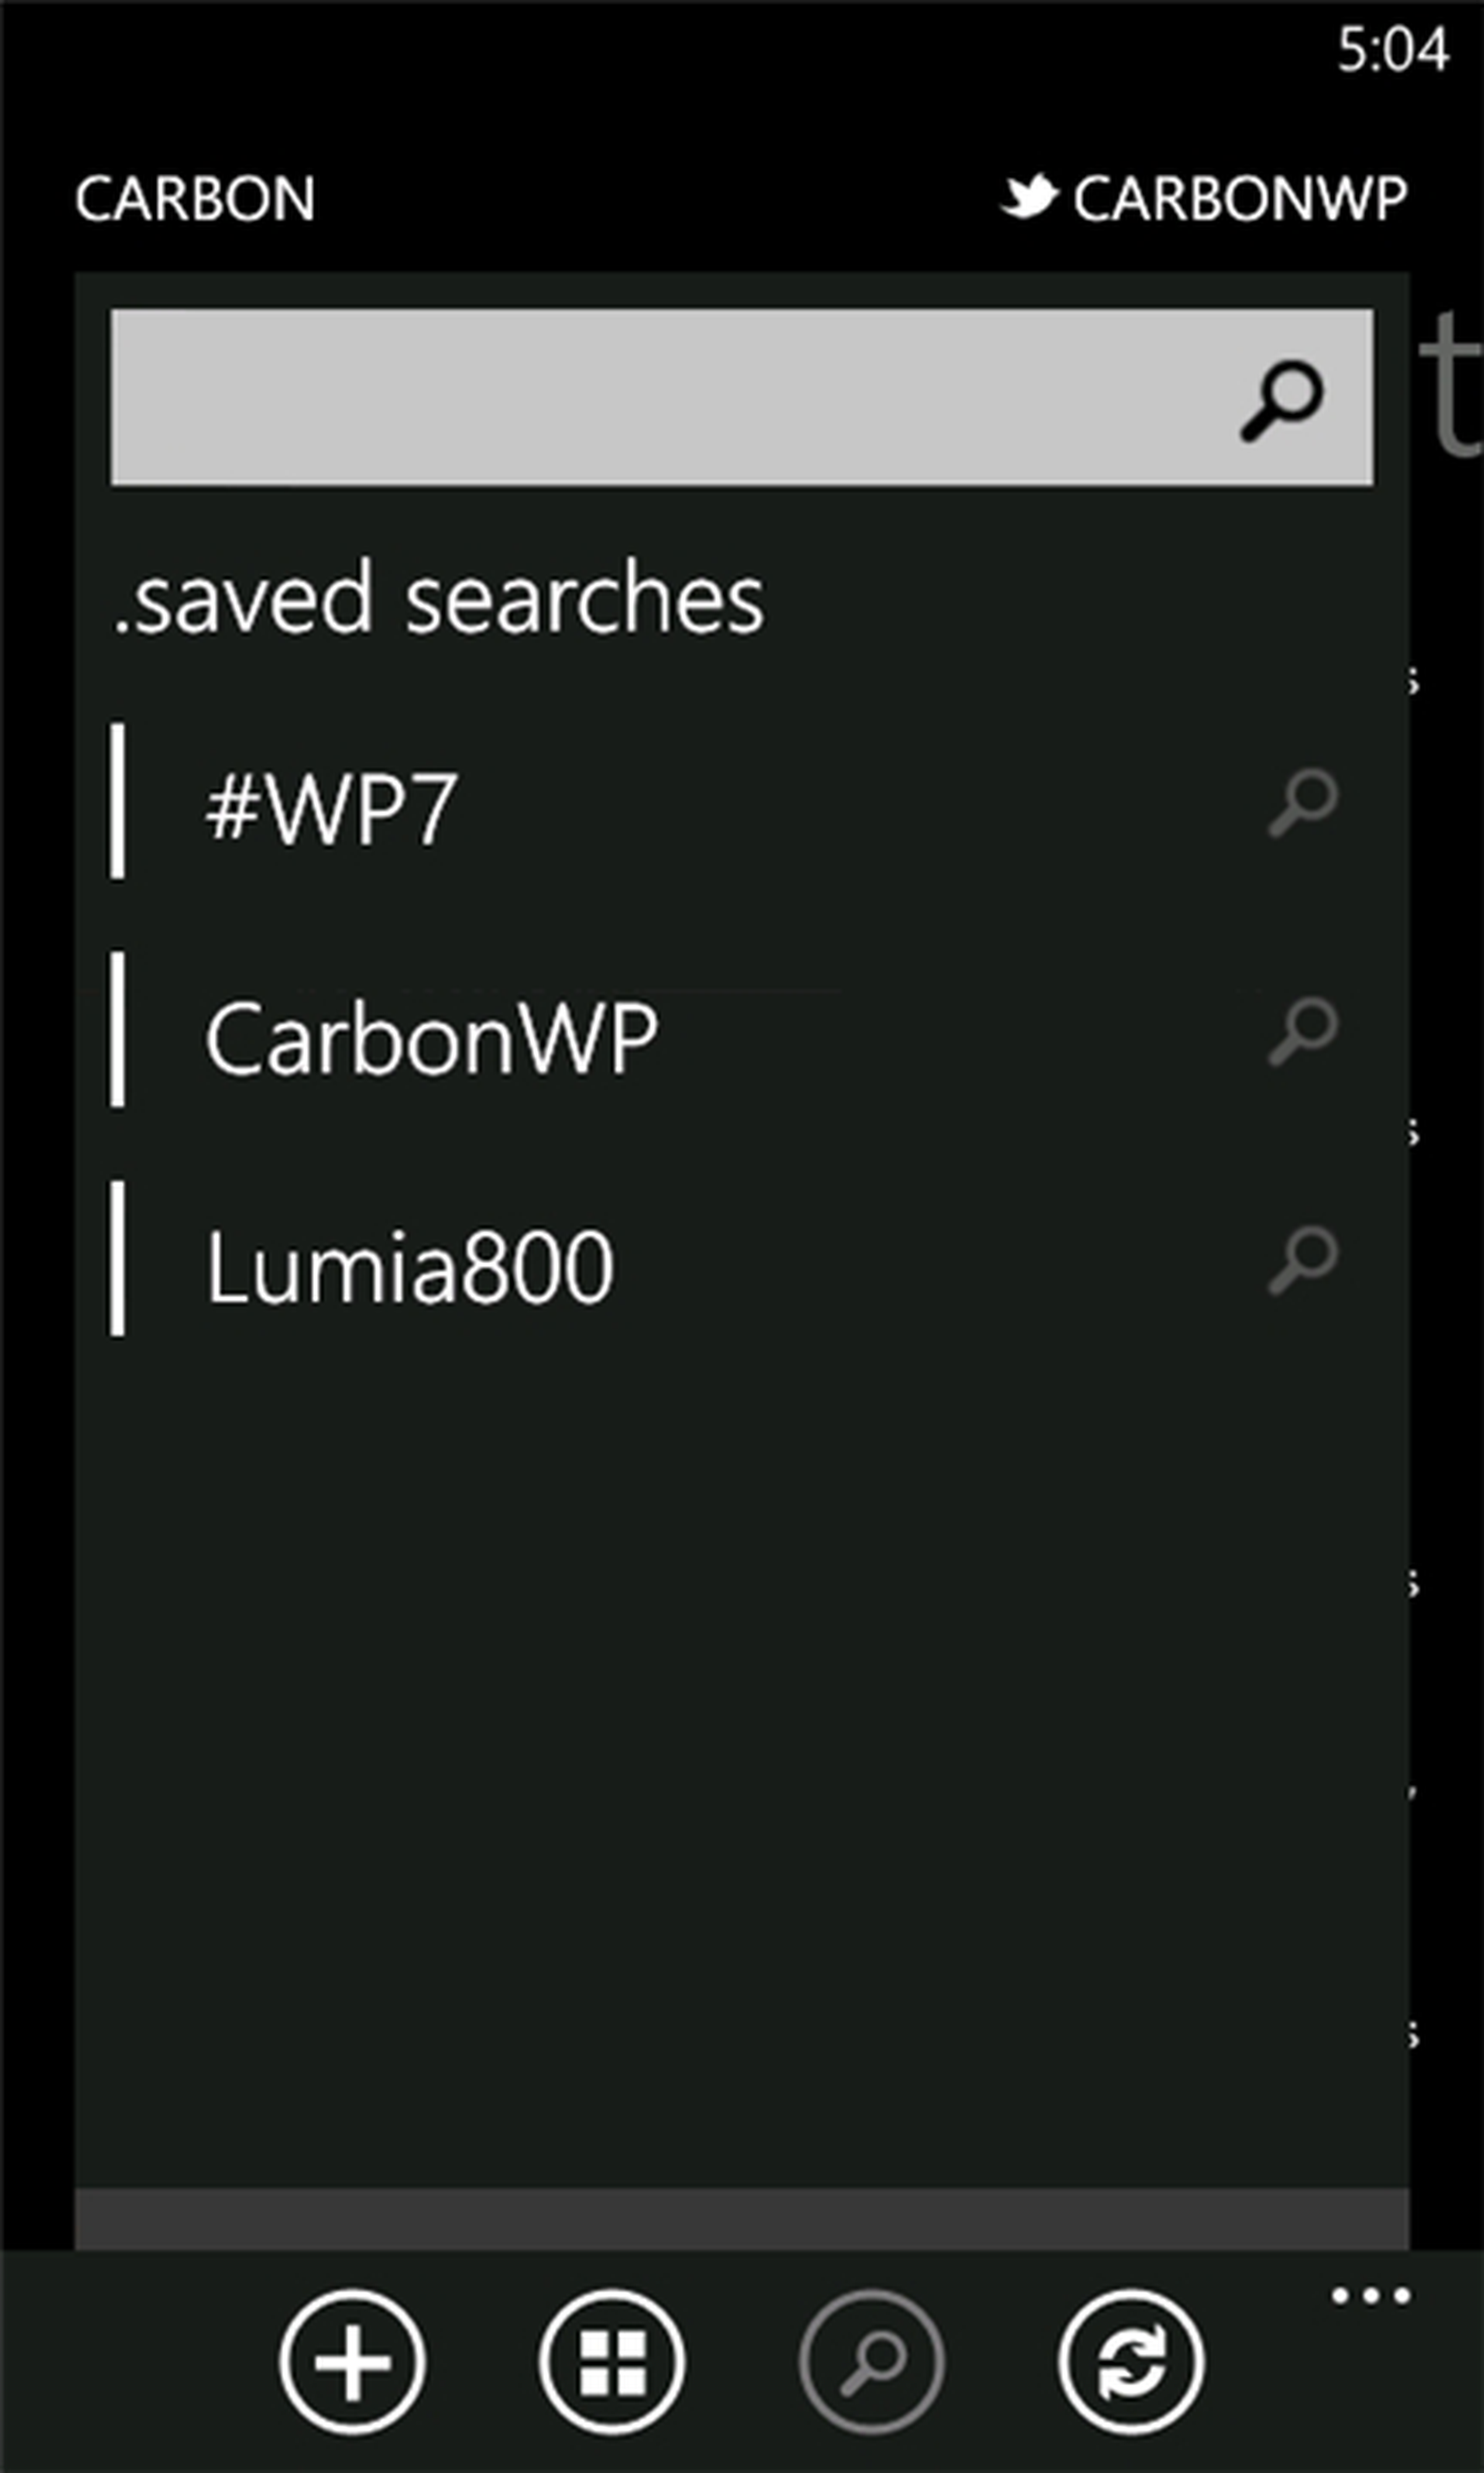 Carbon Twitter client for Windows Phone (press screenshots)